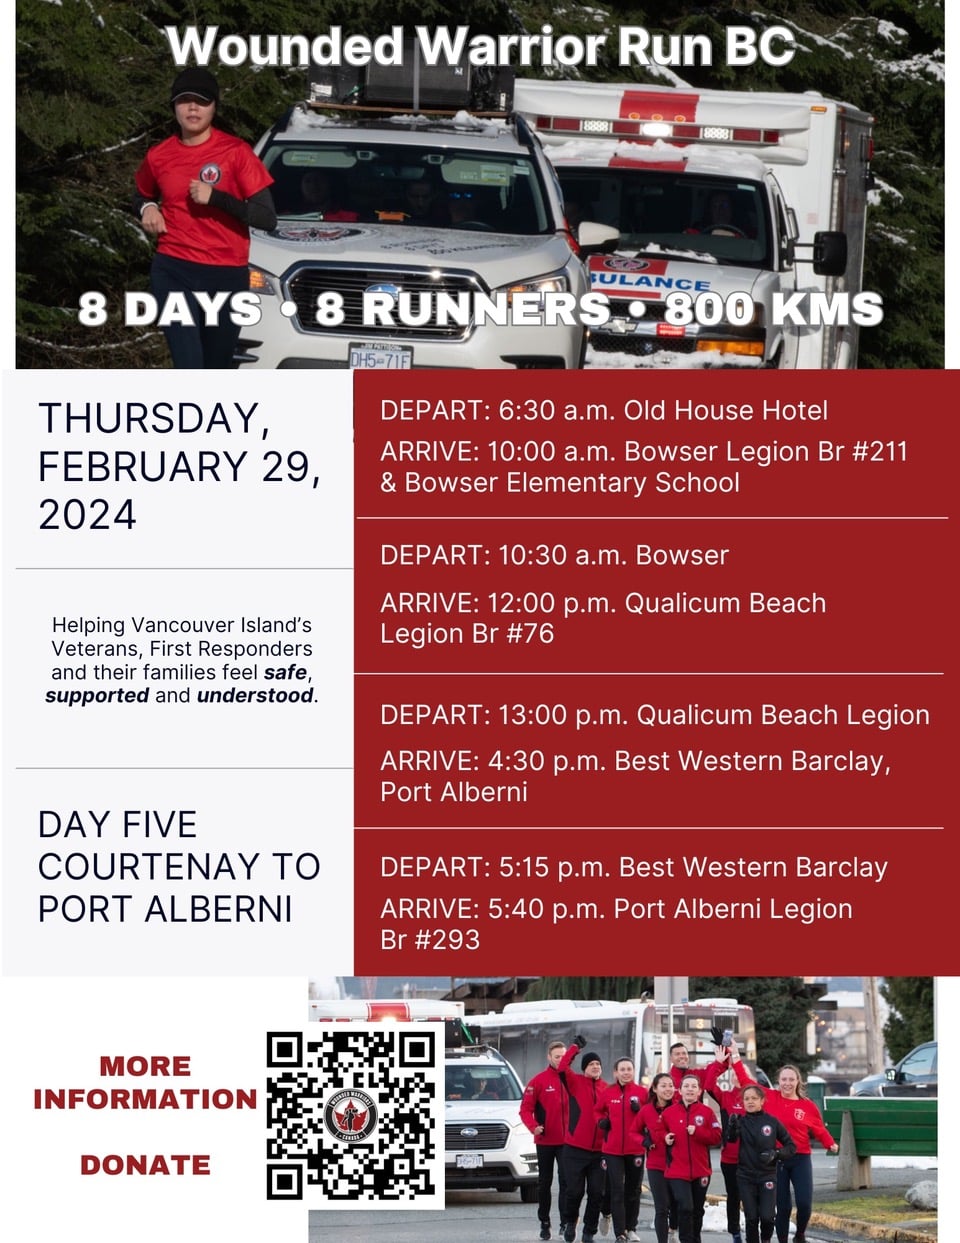 Wounded Warriors Run BC - Thursday February 29, 2024 Day 5 Courtenay to Port Alberni